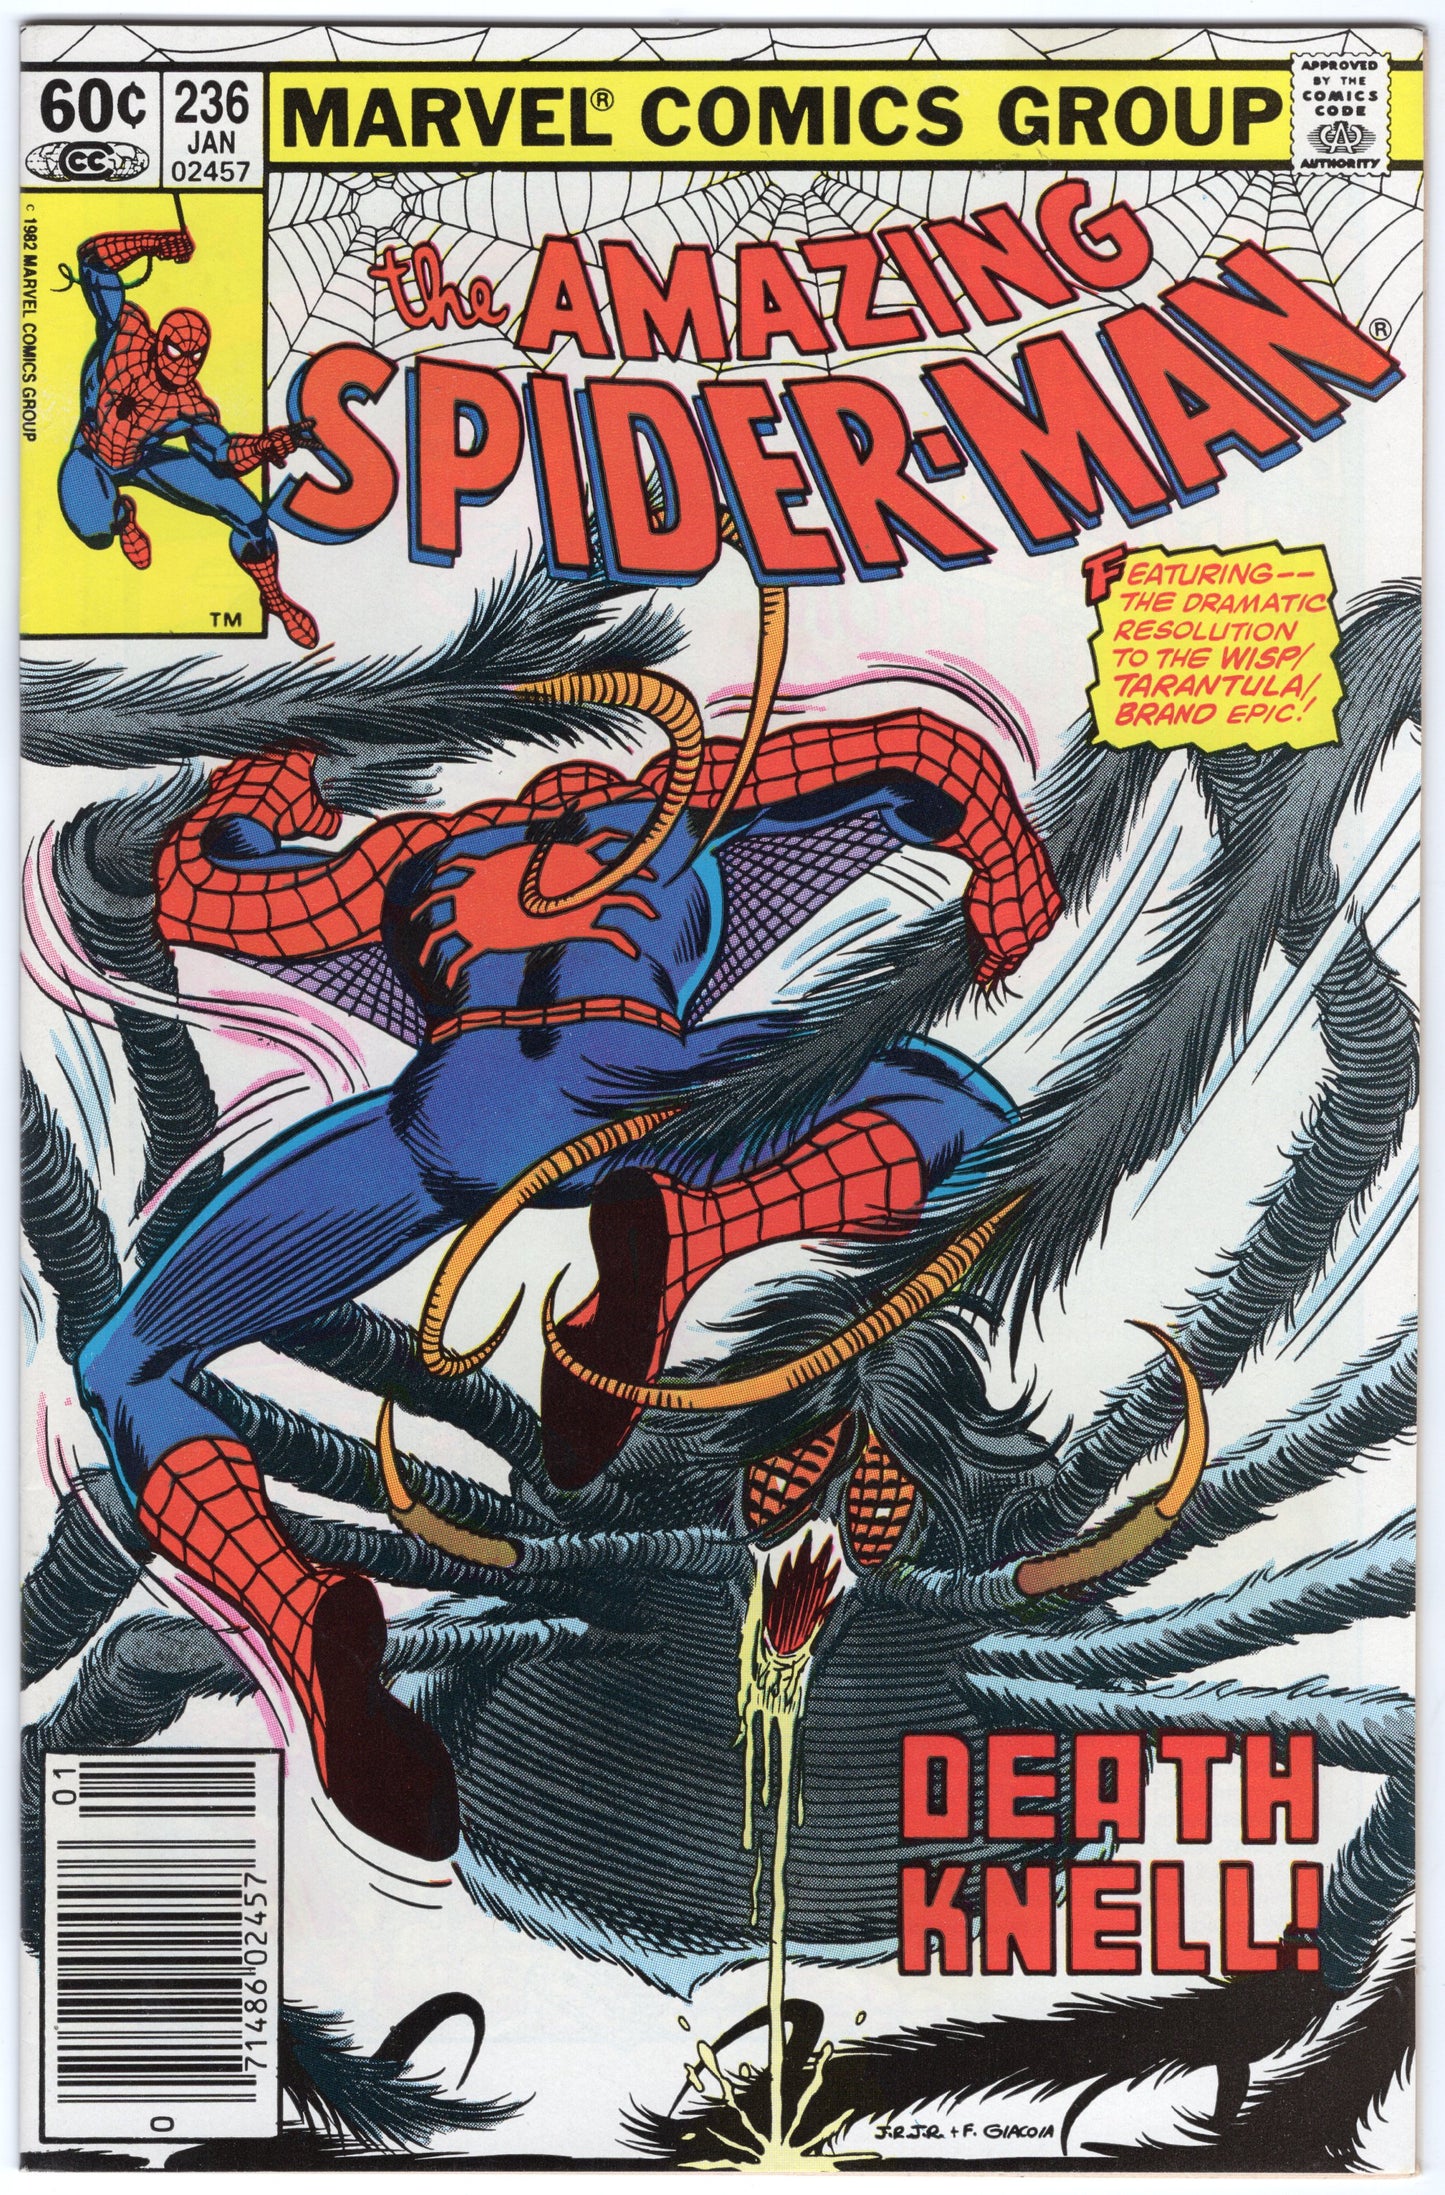 The Amazing Spider-Man - Issue #236 (Jan.1983 - Marvel Comics) VF/NM